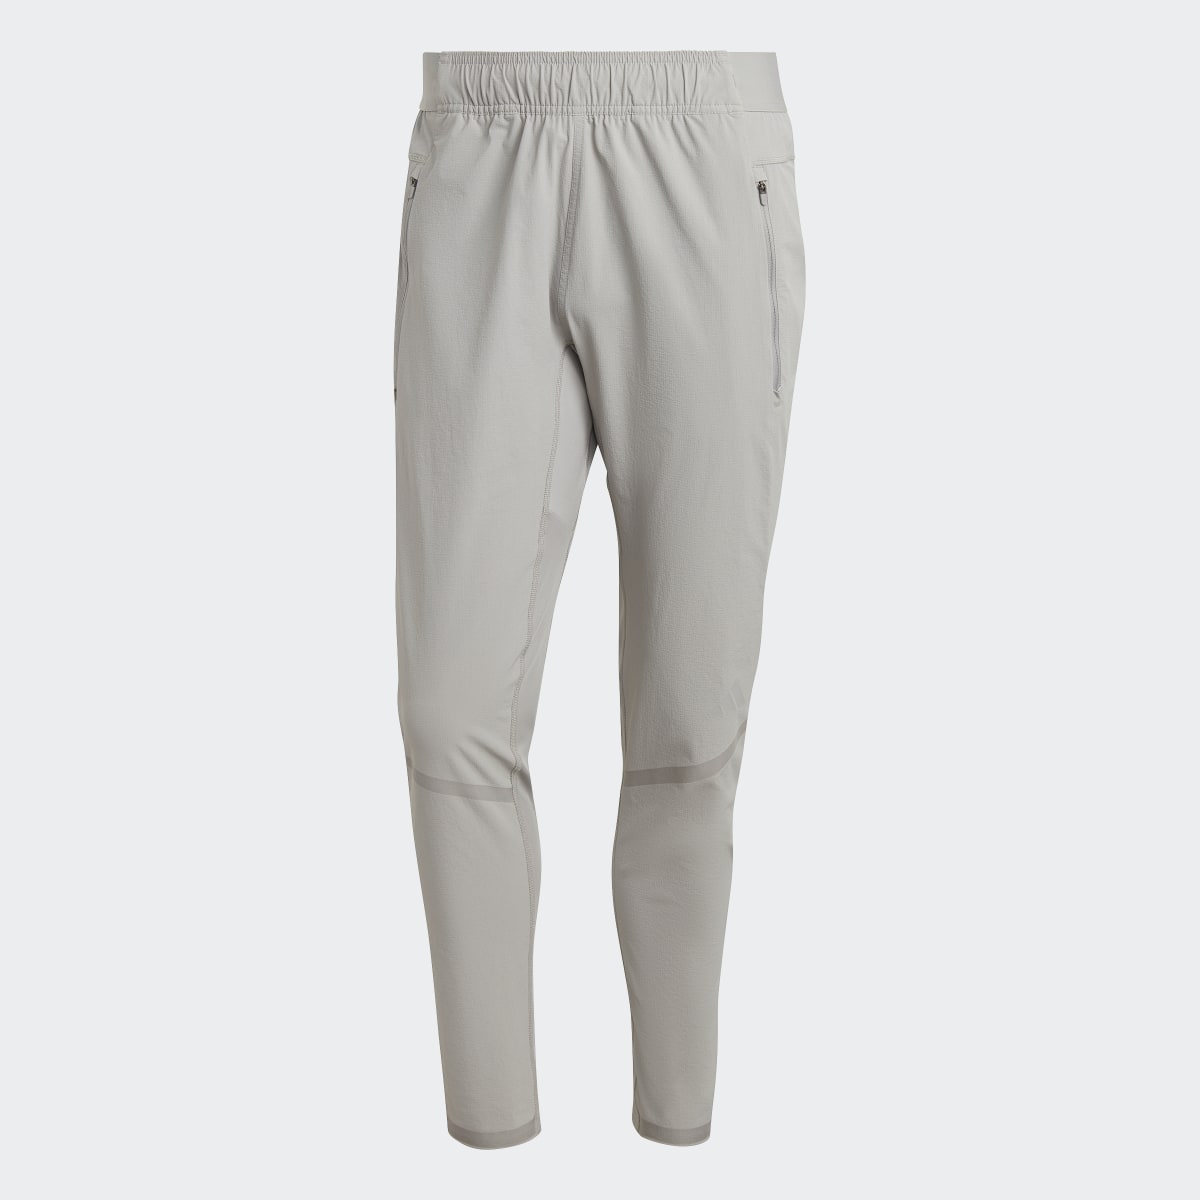 Adidas Designed for Training CORDURA® Workout Pants. 5